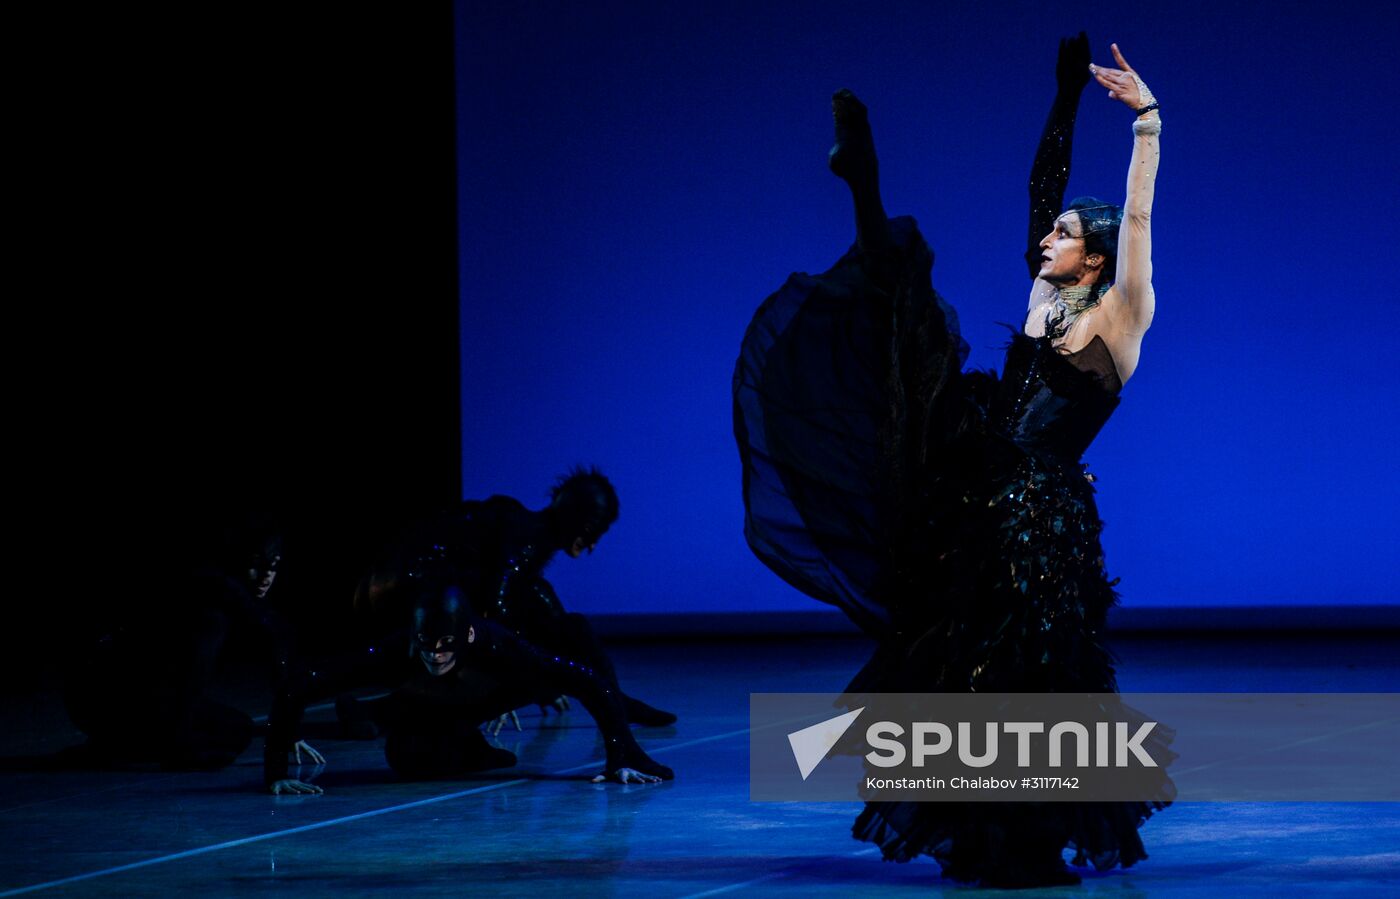 Gala concert of Russian ballet stars at Mikhailovsky Theater